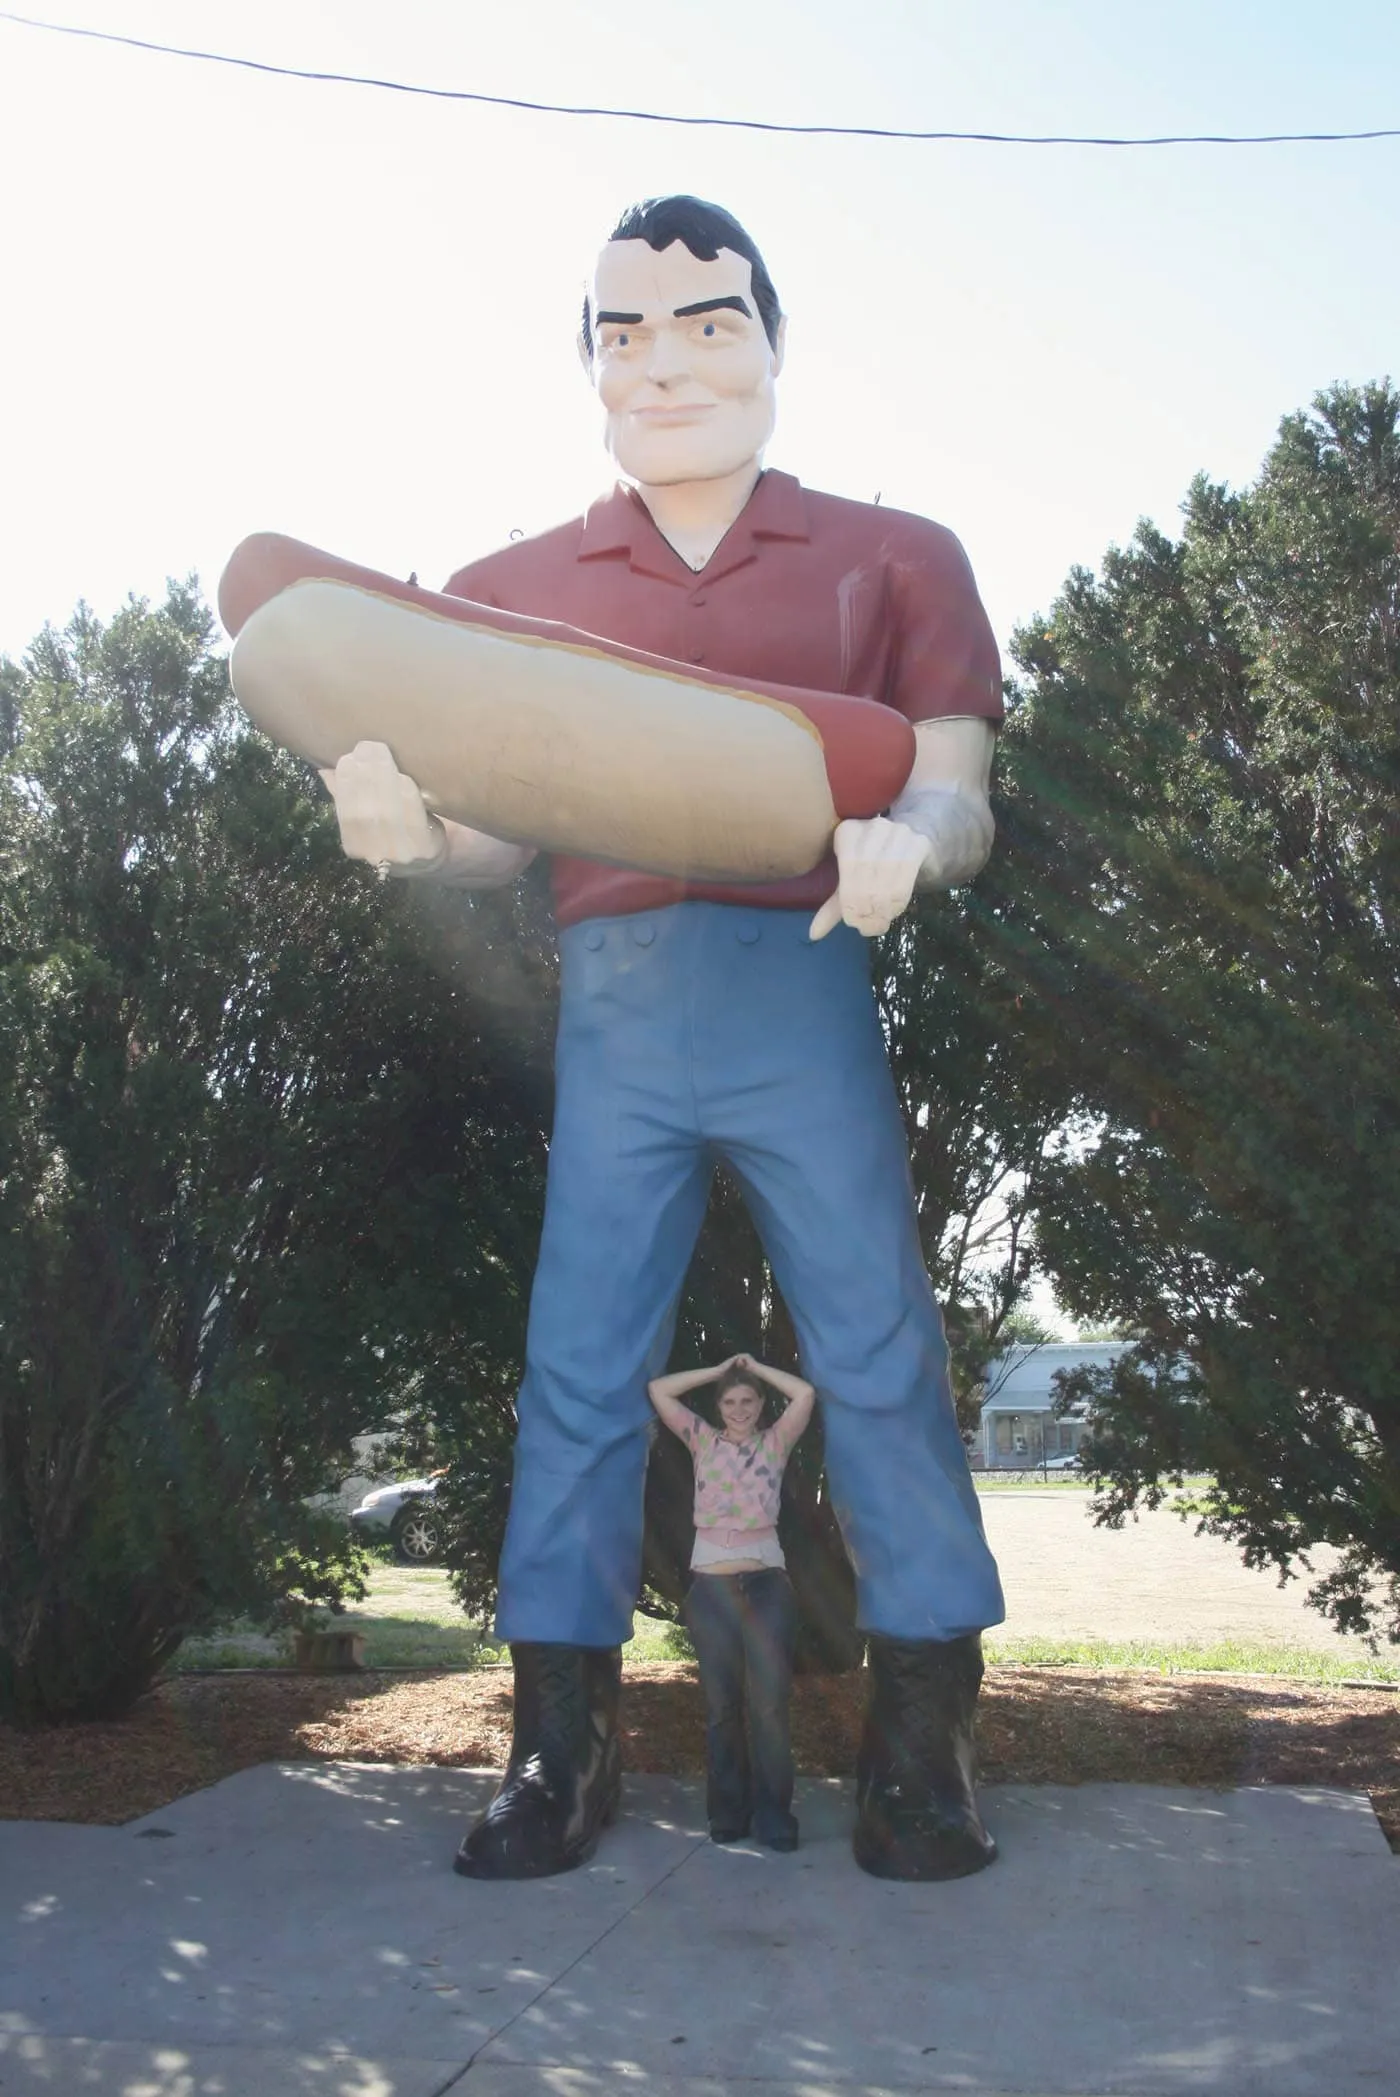  Muffler Man Holding a Hot Dog in Atlanta, Illinois. A Paul Bunyan Statue on Route 66.